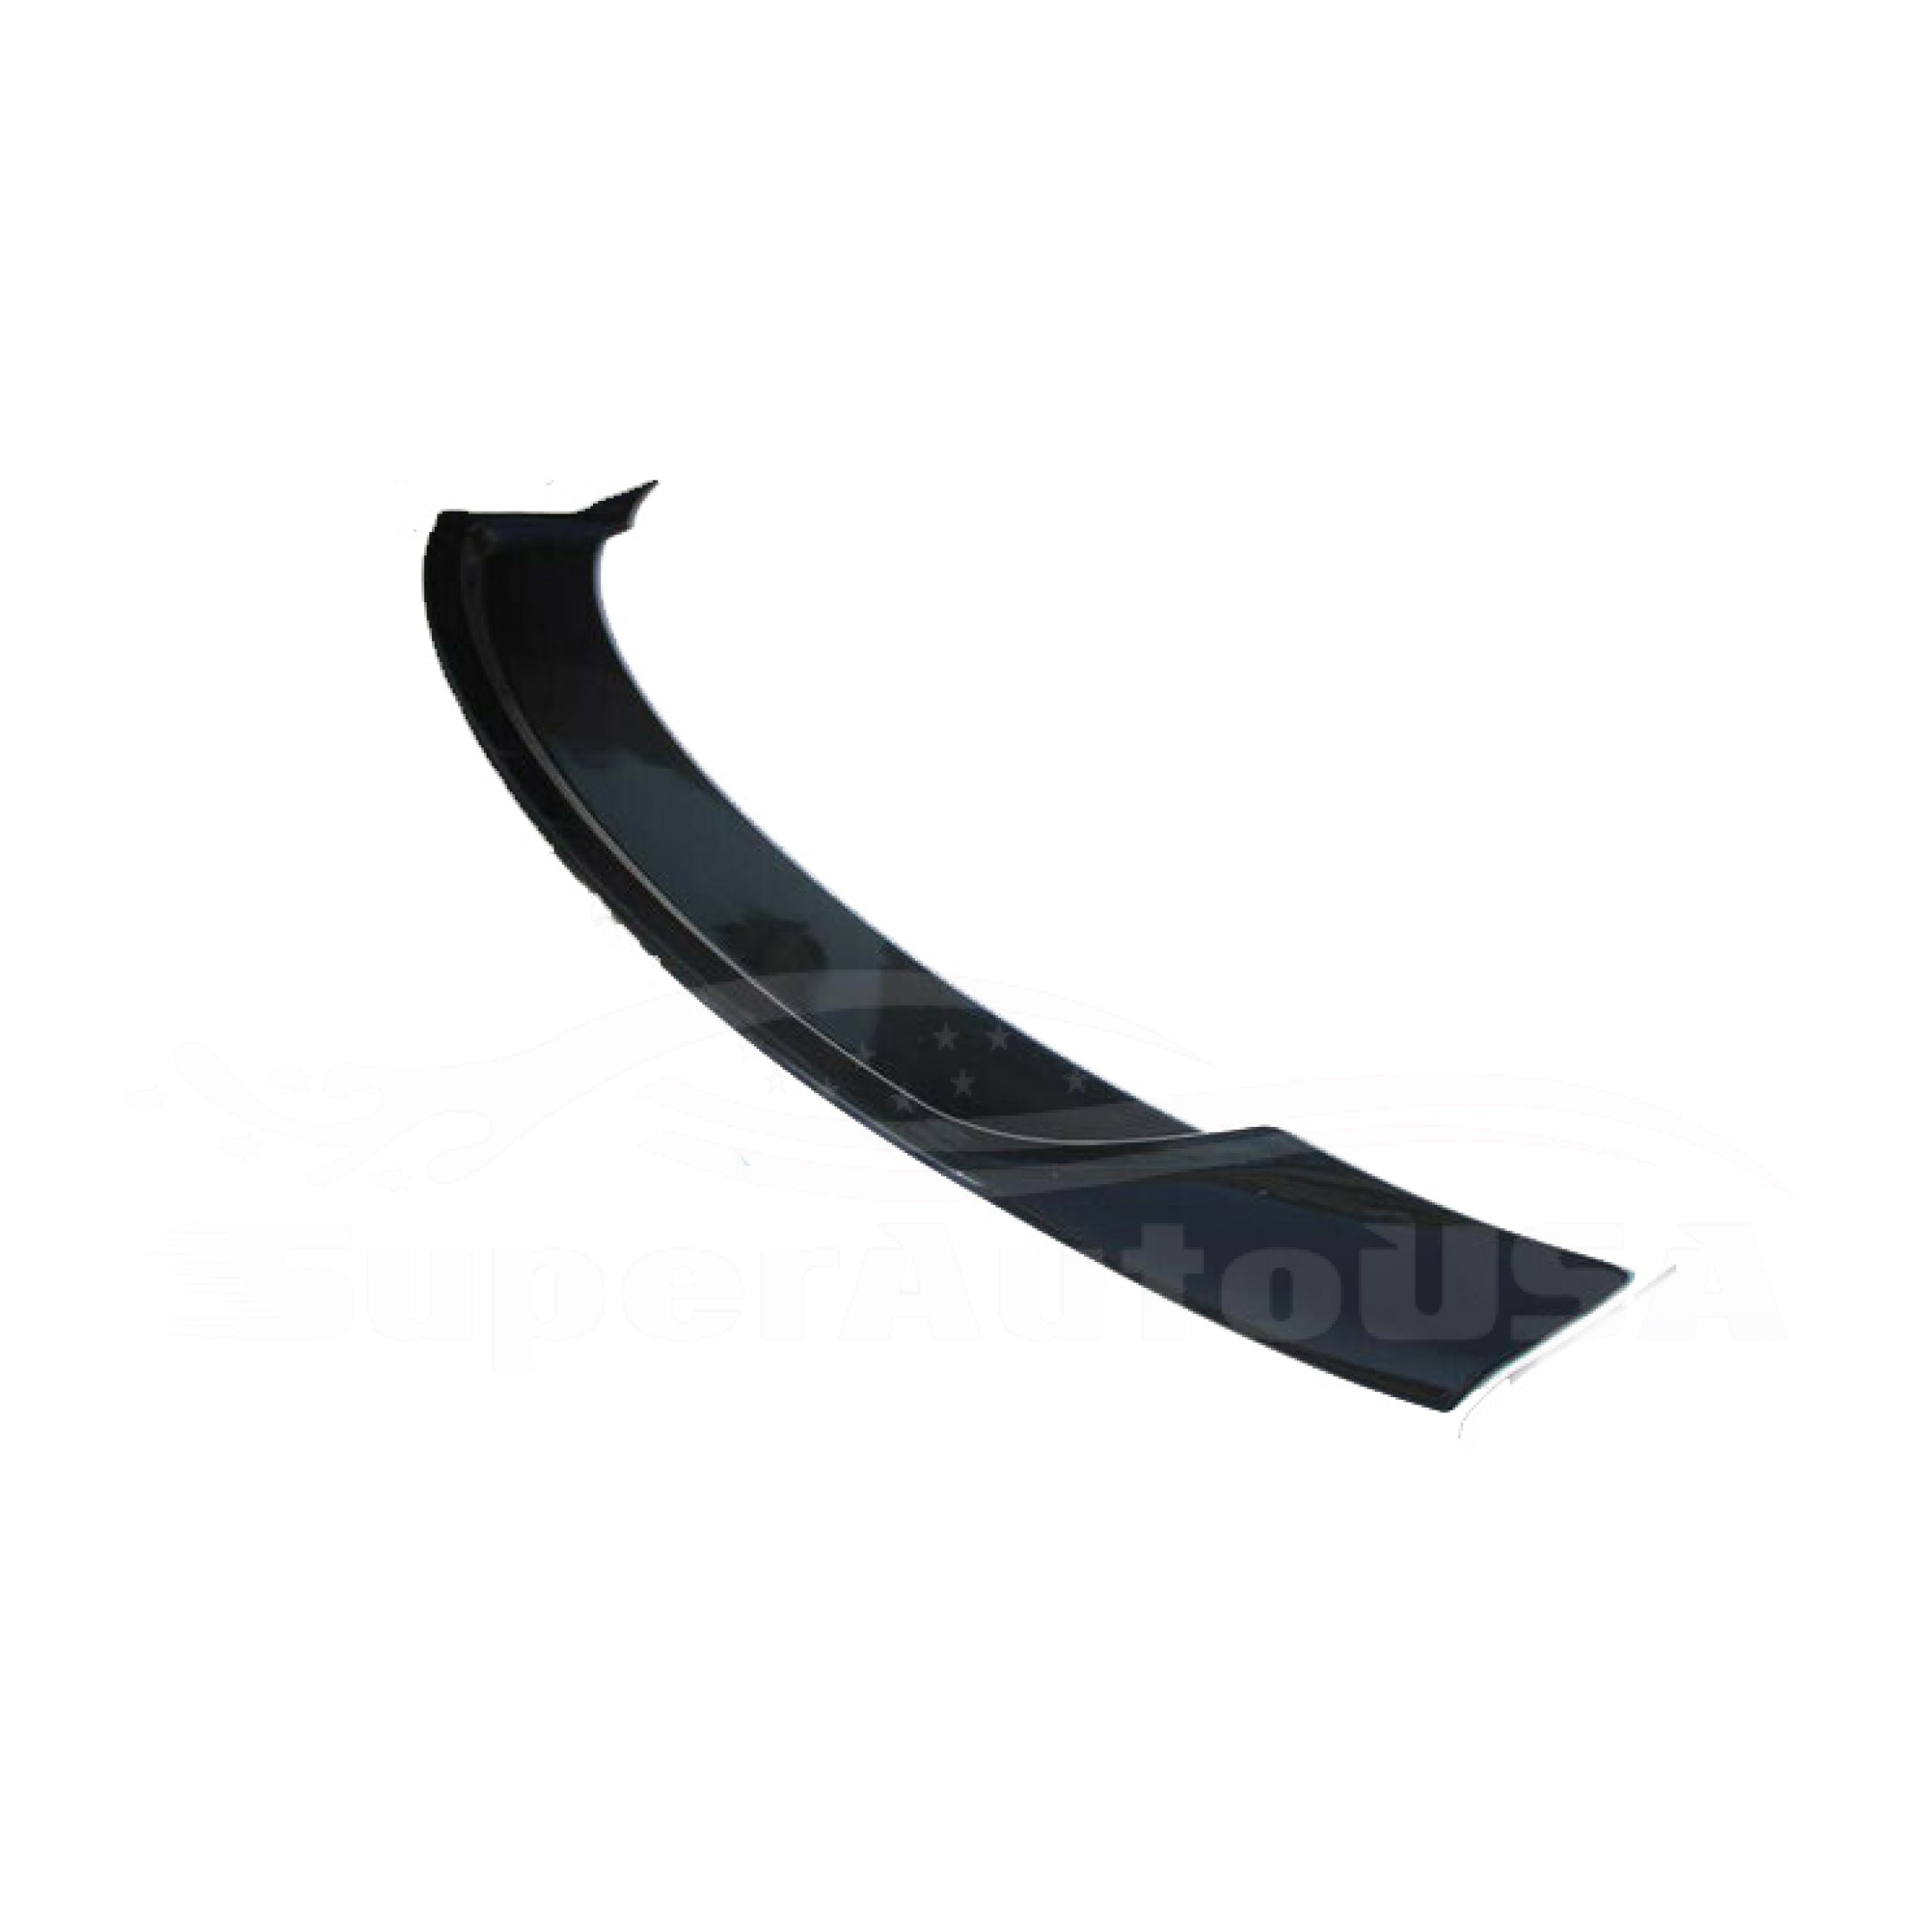 For Hyundai Elantra 2017-2020 JDM Mugen Rear Trunk Spoiler Wing Lid (Gloss Black)